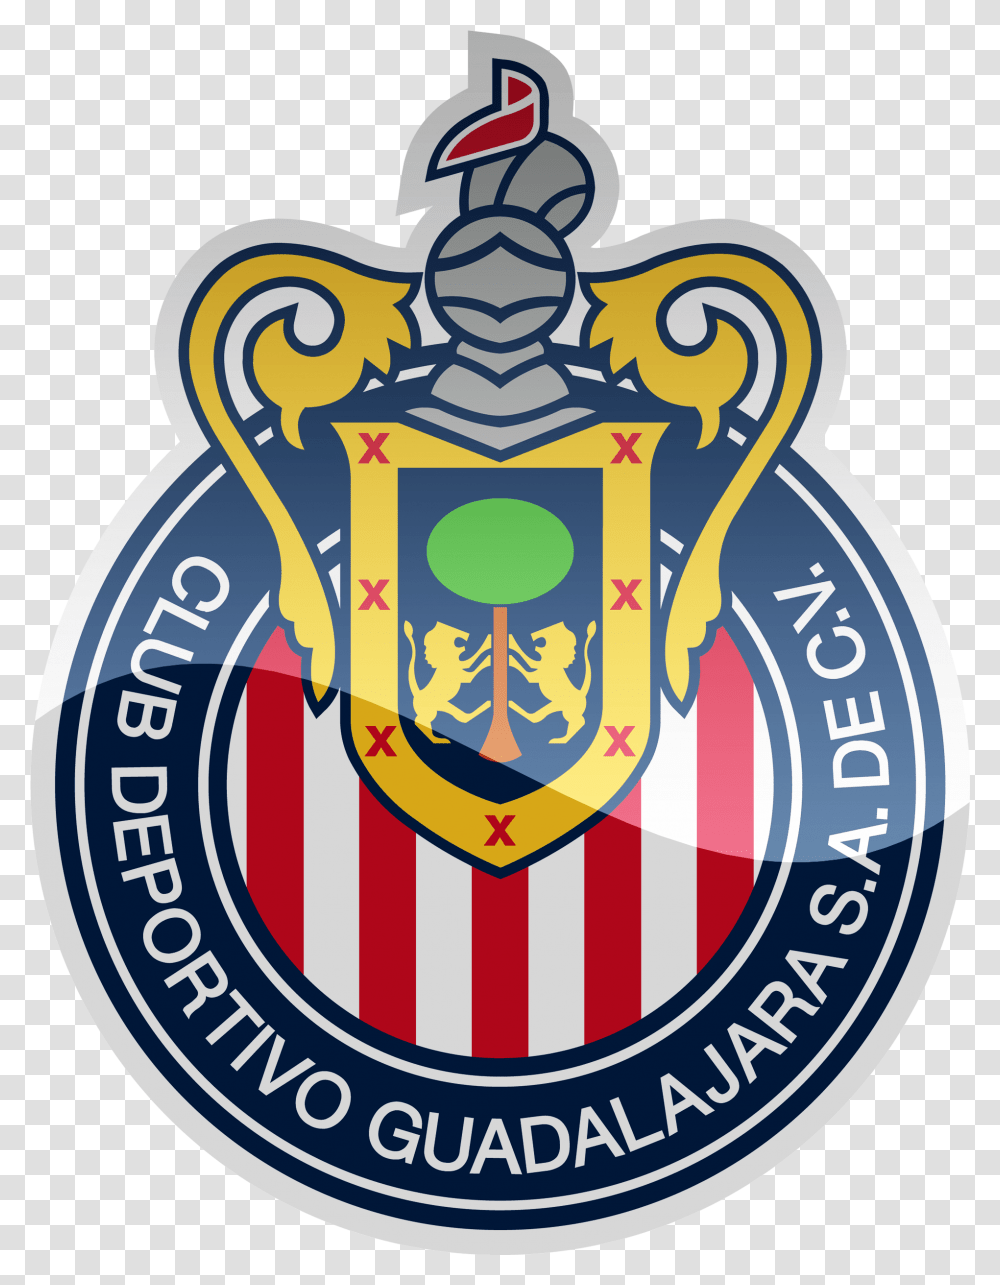 Cd Guadalajara Hd Logo Chivas Logo Dream League Soccer 2019, Trademark, Emblem, Badge Transparent Png